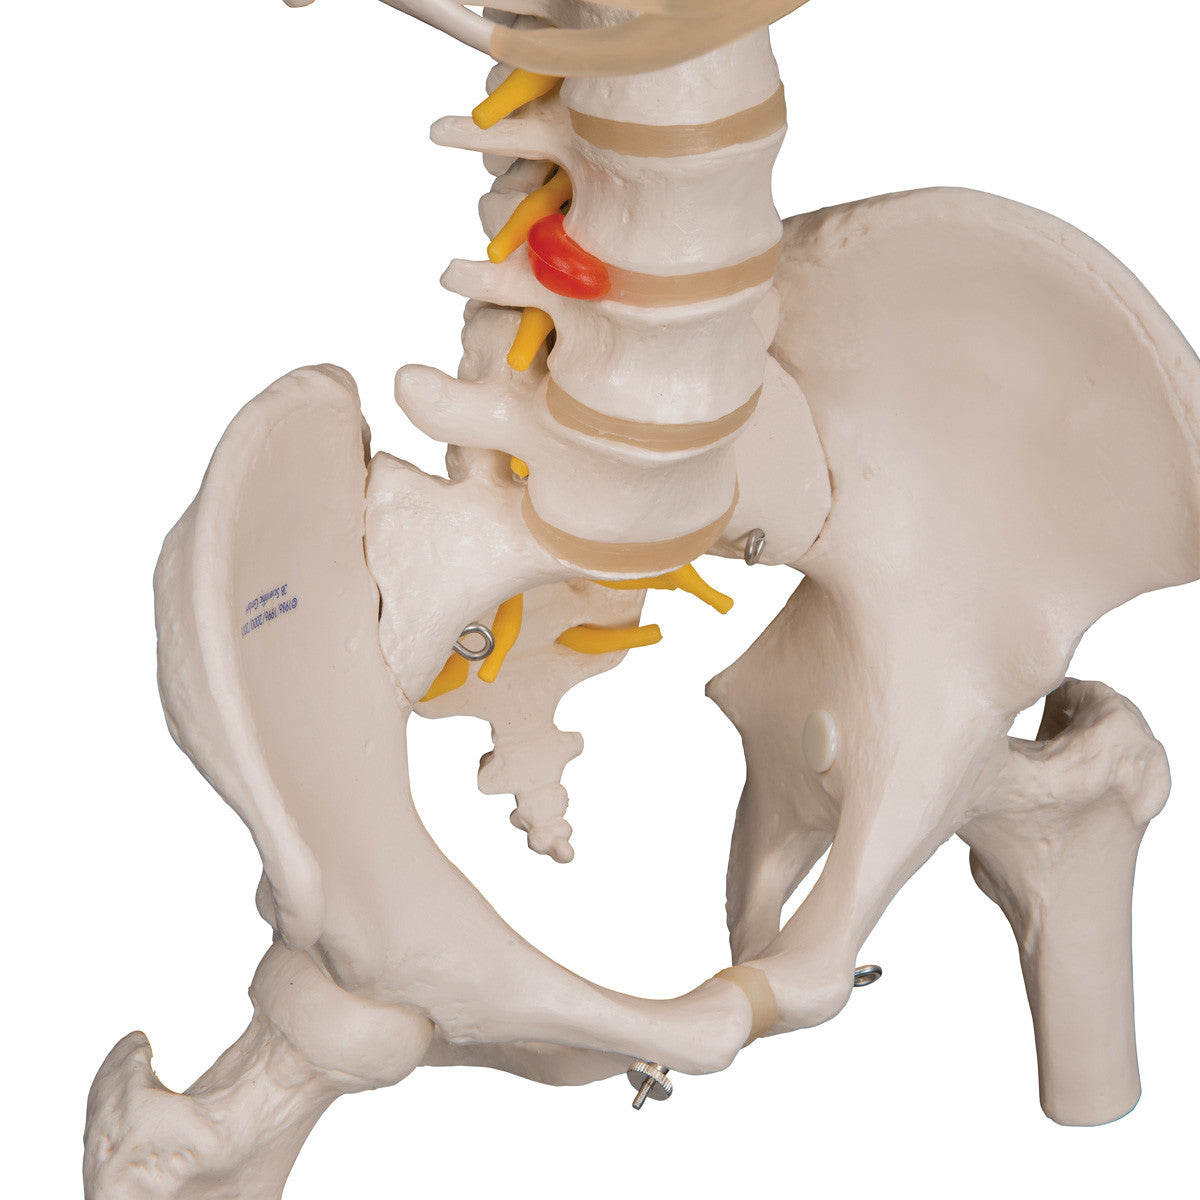 a56-2_06_1200_1200_classic-flexible-human-spine-model-with-ribs-femur-heads-3b-smart-anatomy__78459.1589753251.1280.1280.jpg